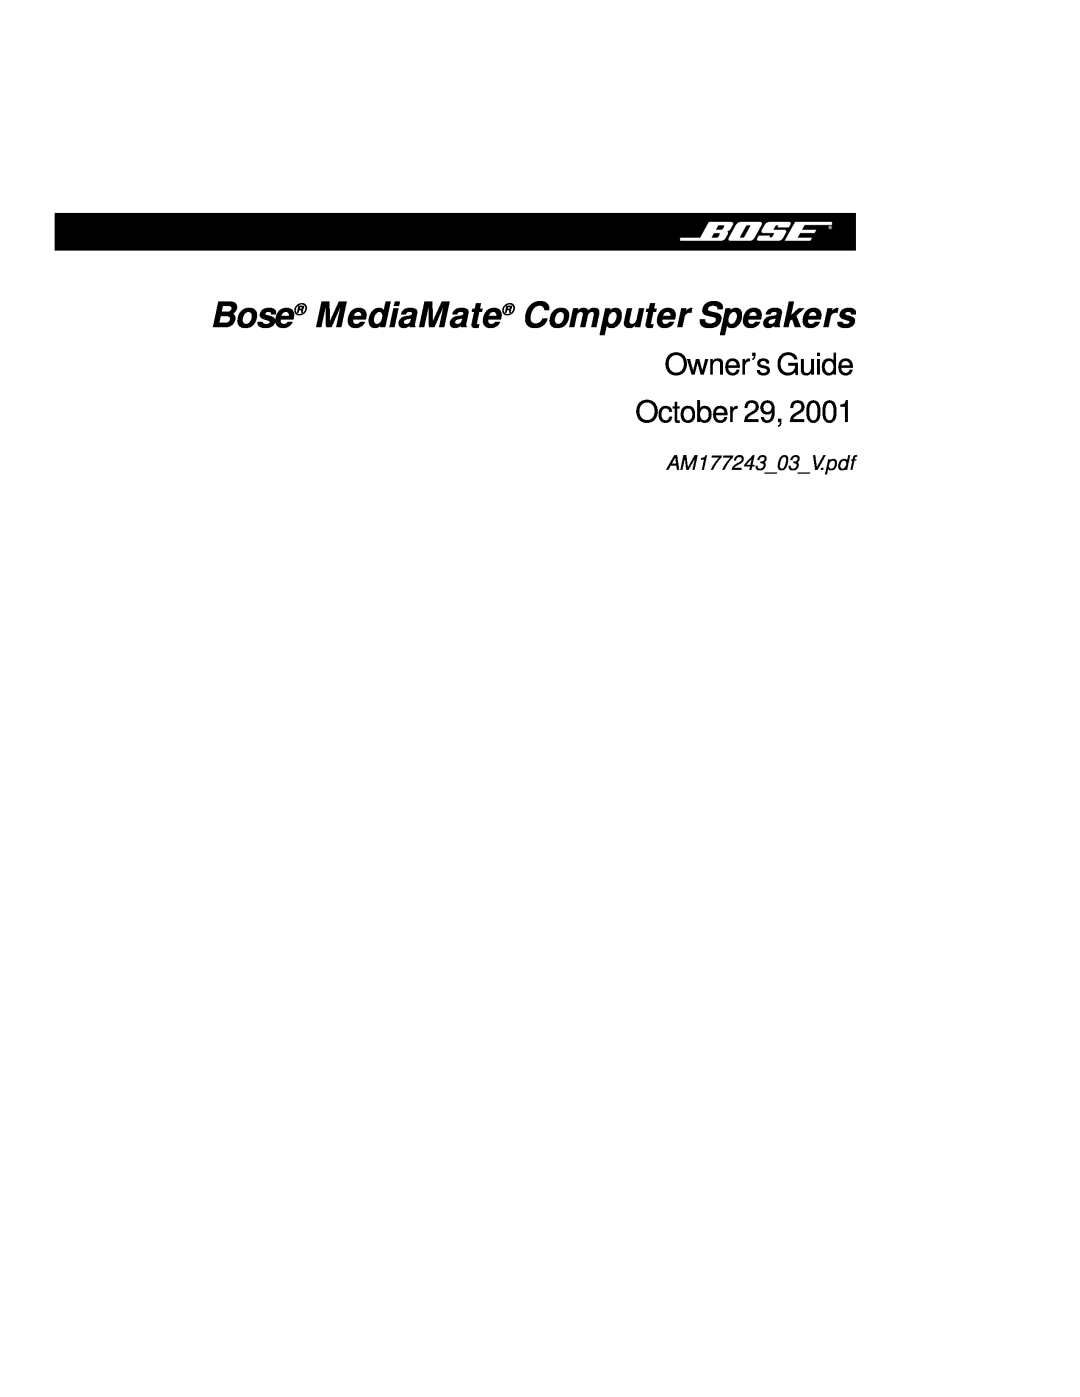 Bose manual Bose MediaMate Computer Speakers, Owner’s Guide October 29, AM17724303V.pdf 